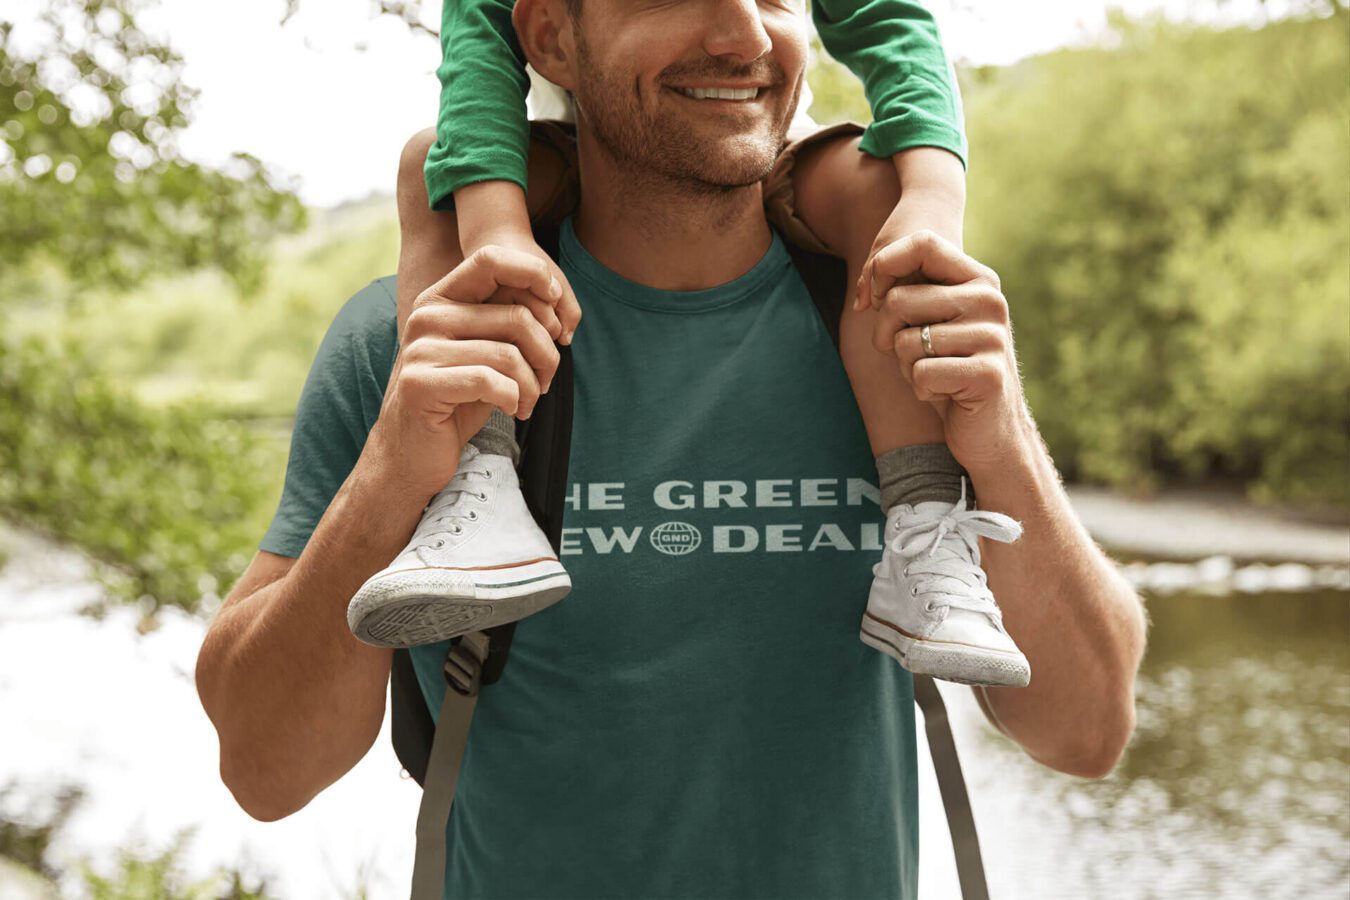 green new deal tshirt